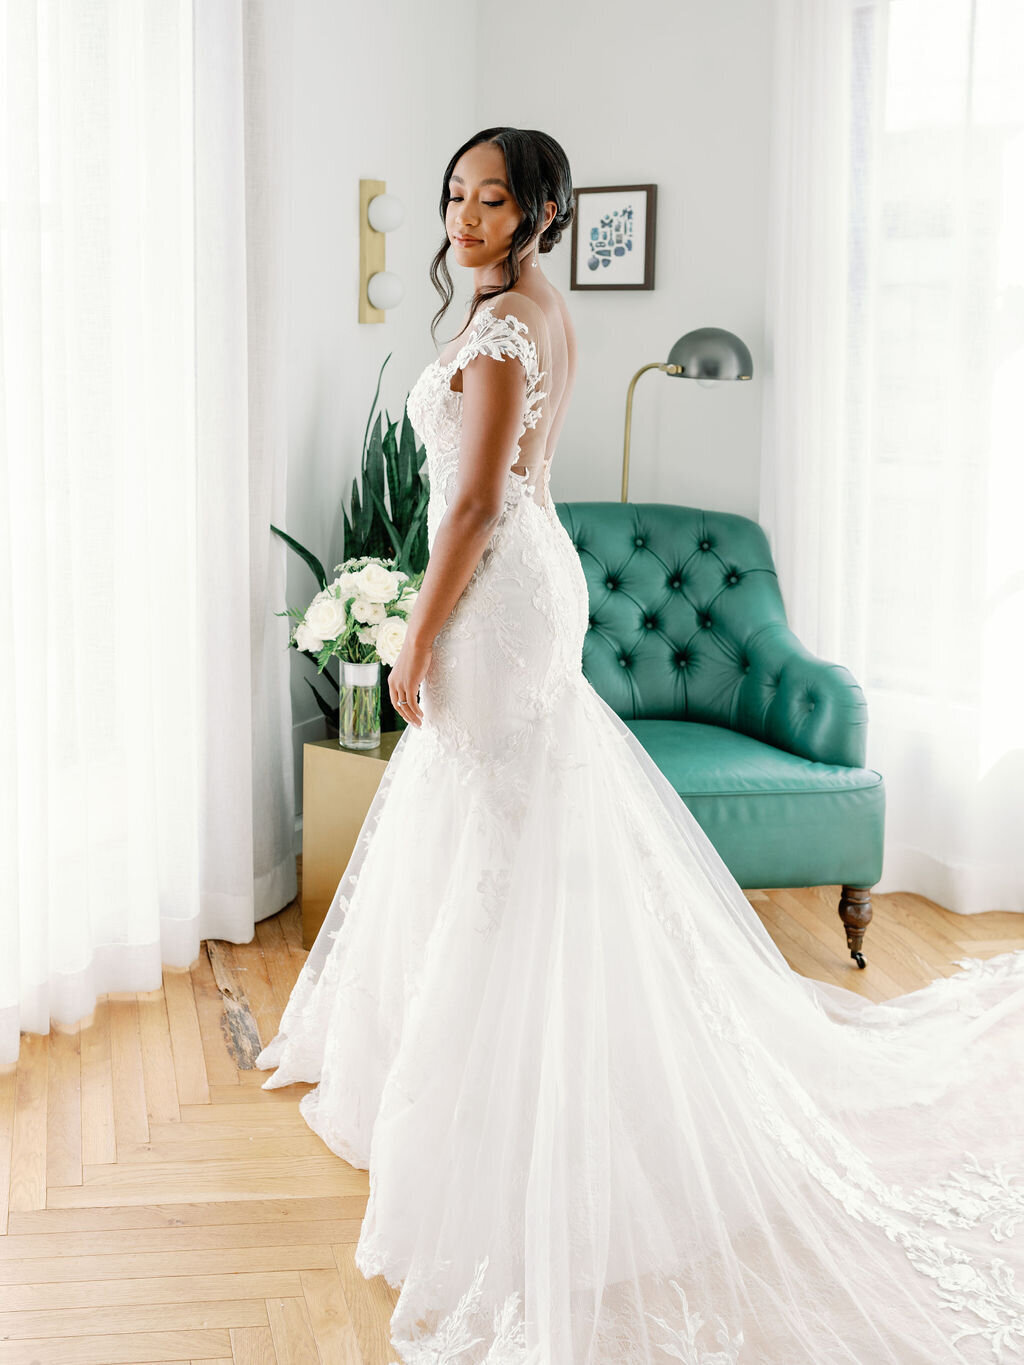 Jayne Heir Weddings and Events - Washington DC Metropolitan Area Wedding and Event Planner - Modern, Stylish, Custom, Top, Best Photo - 12